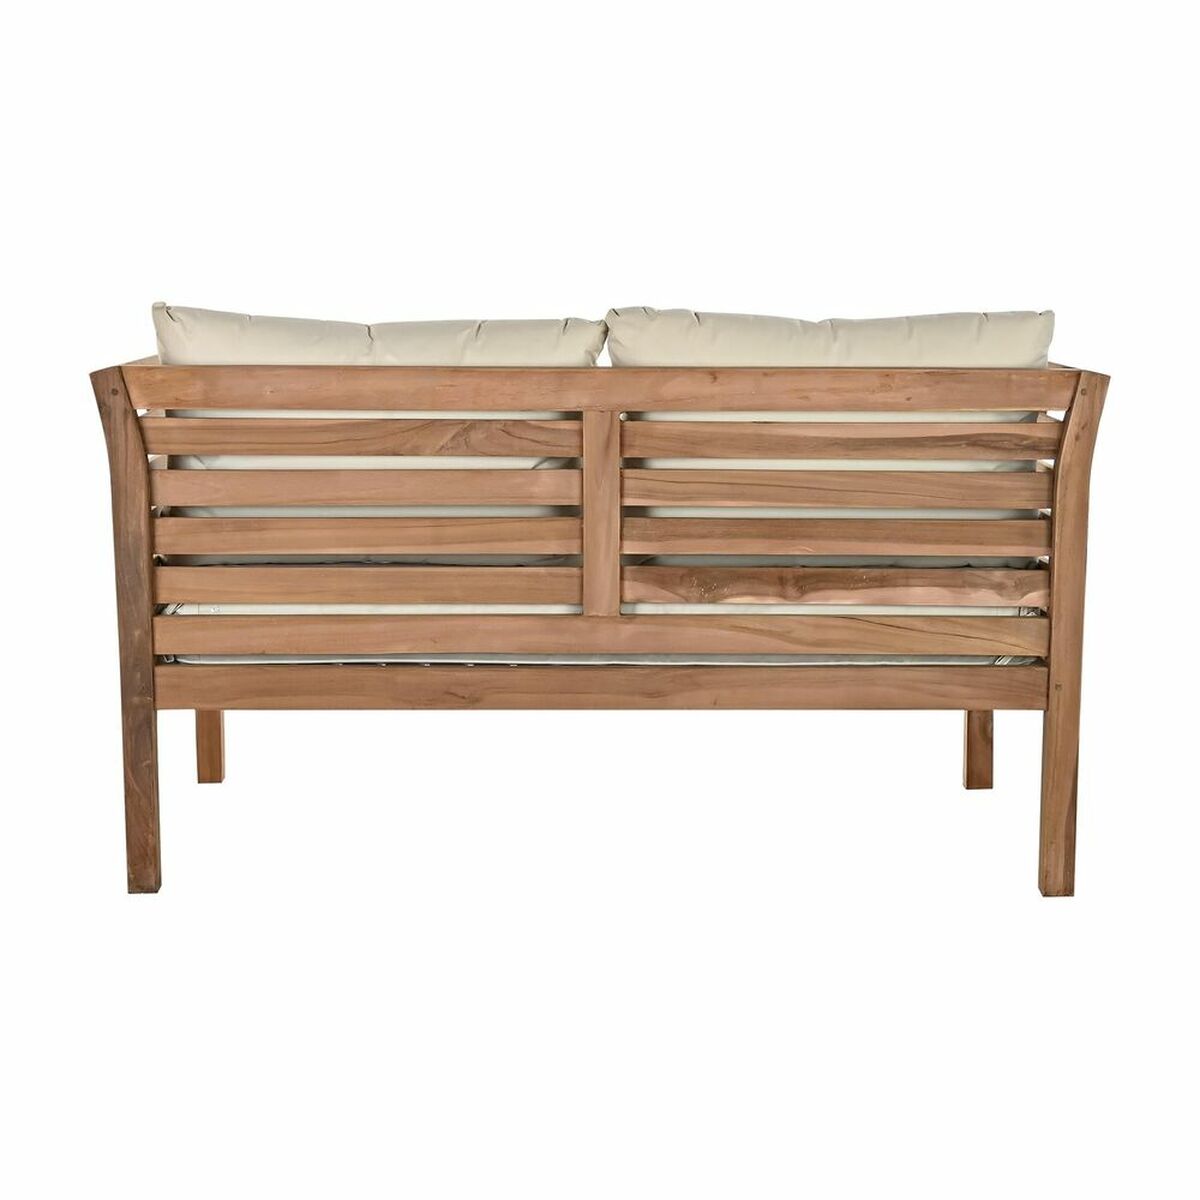 Sofa ogrodowa DKD Dekor Home Brown tekowy bawełna (155 x 85 x 70 cm)